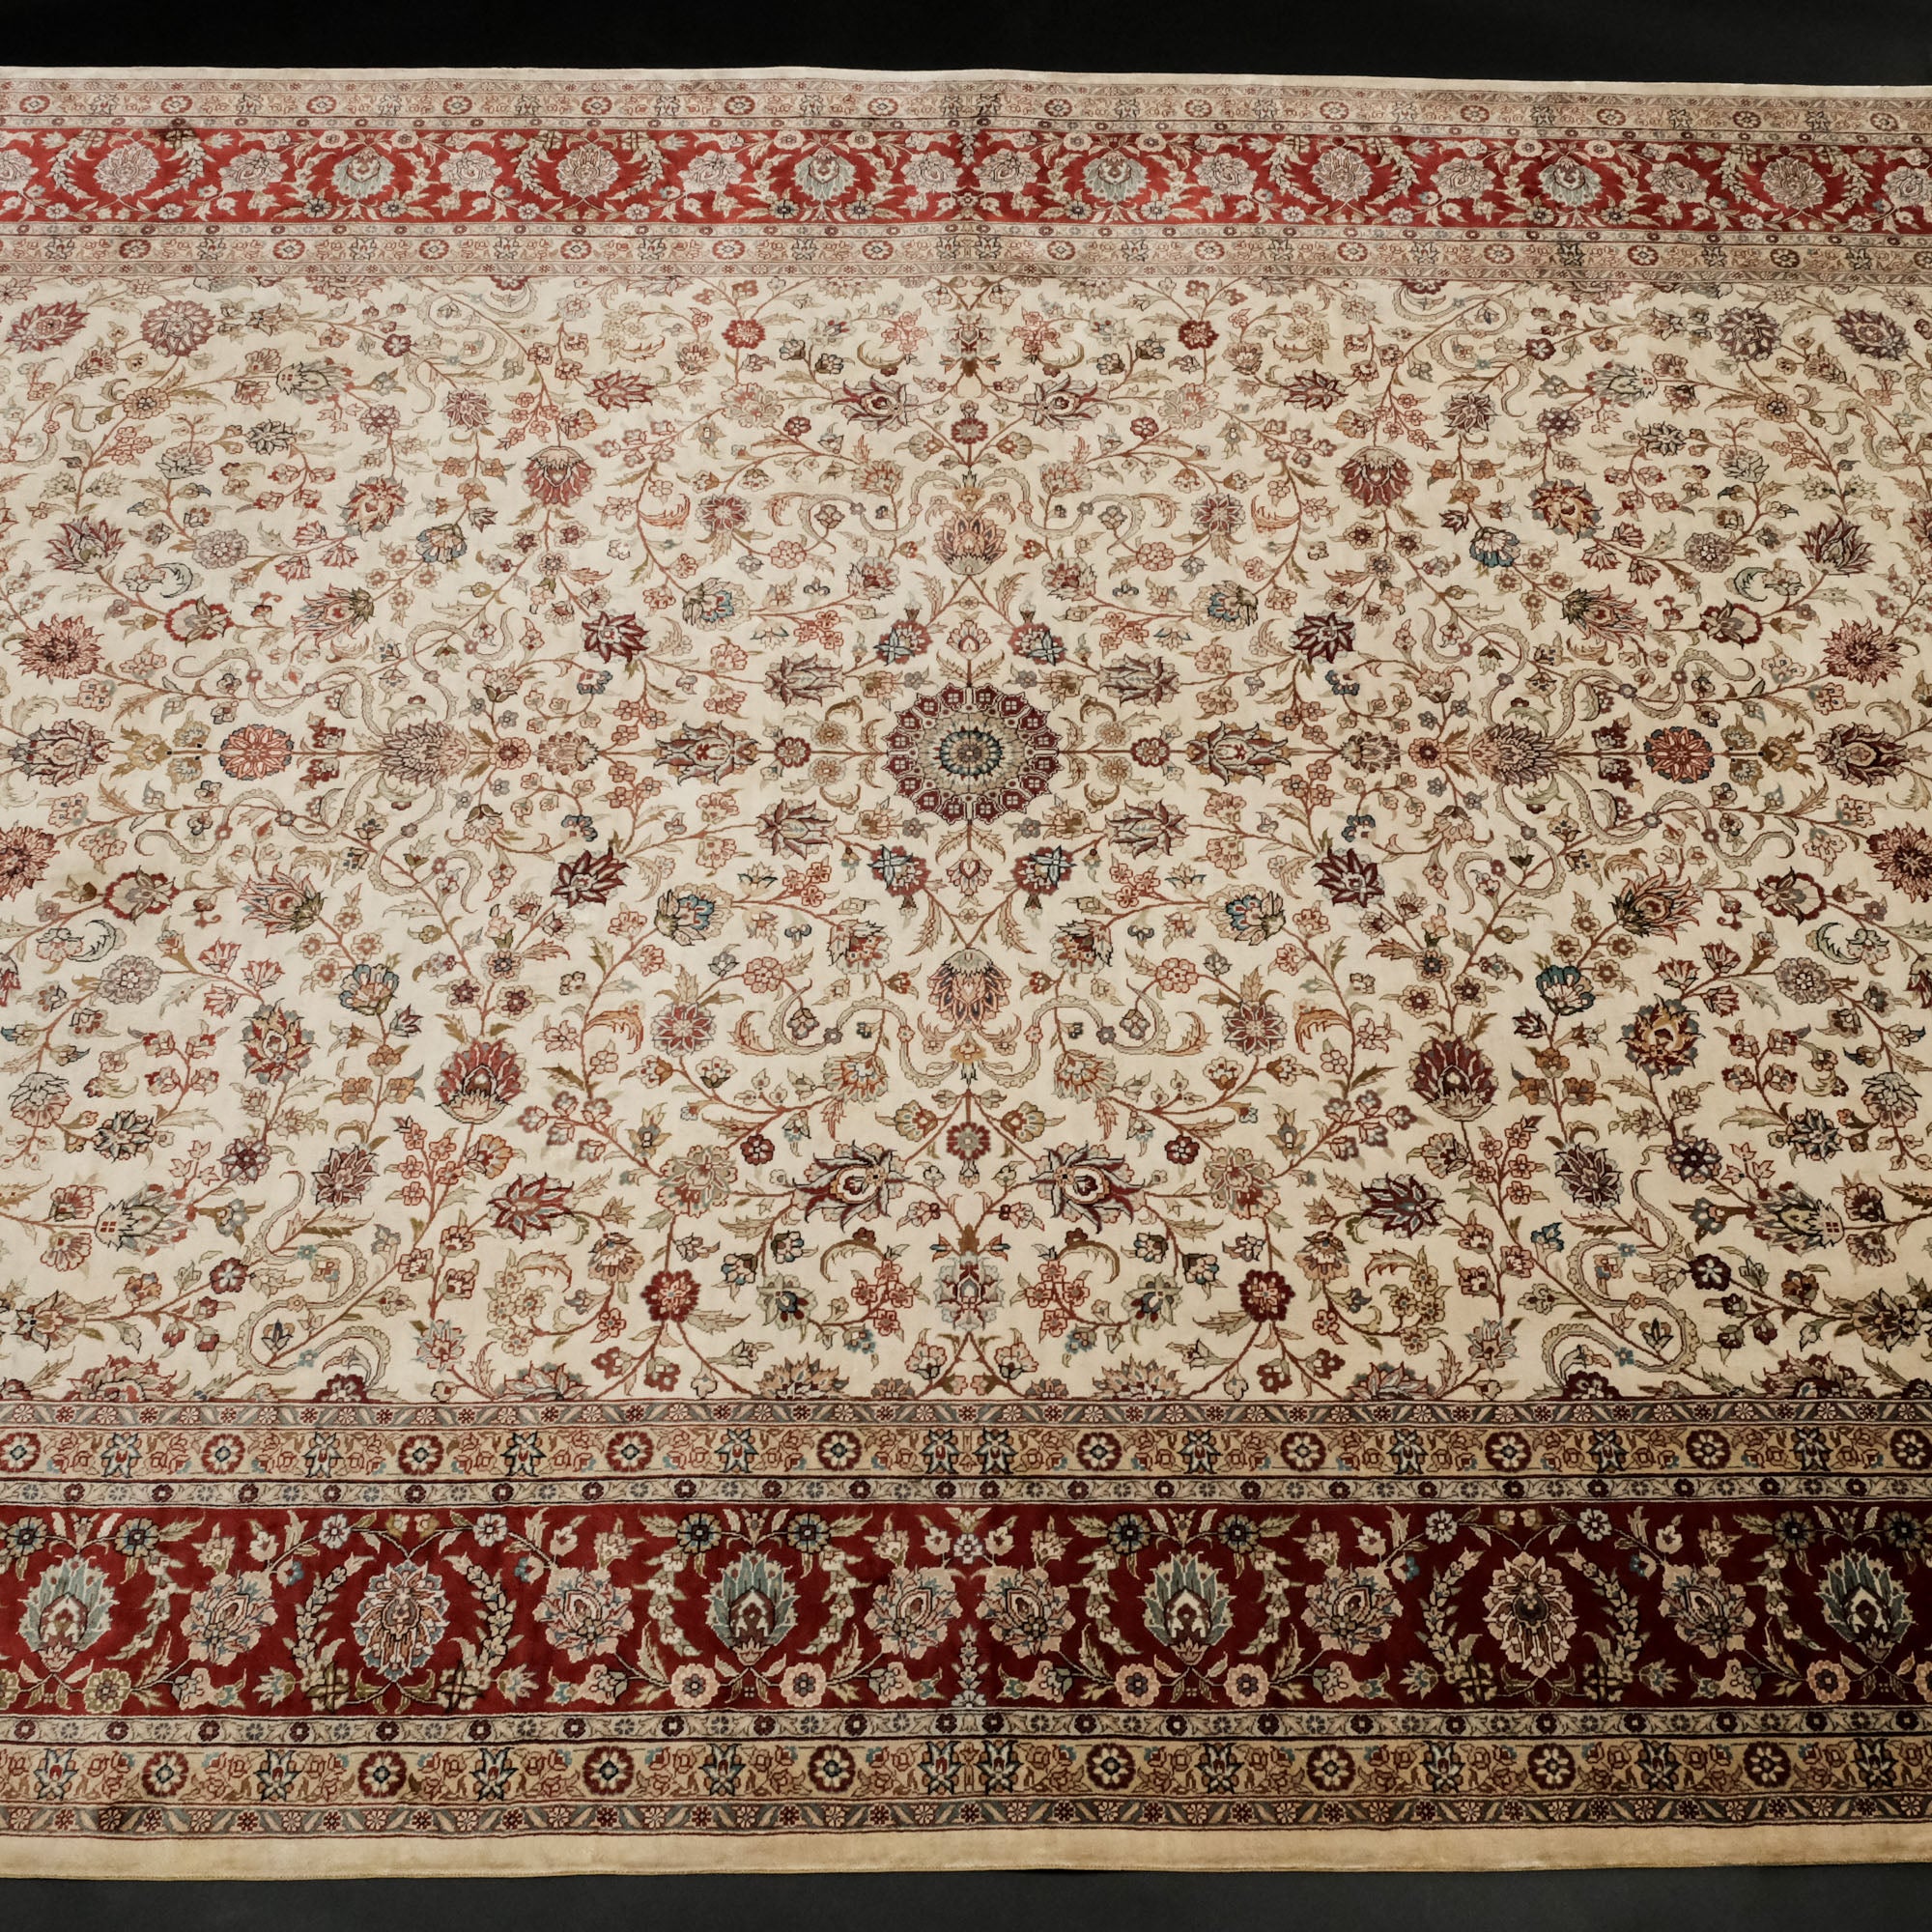 Uşak Frame Patterned Hand Woven Cream Silk Carpet